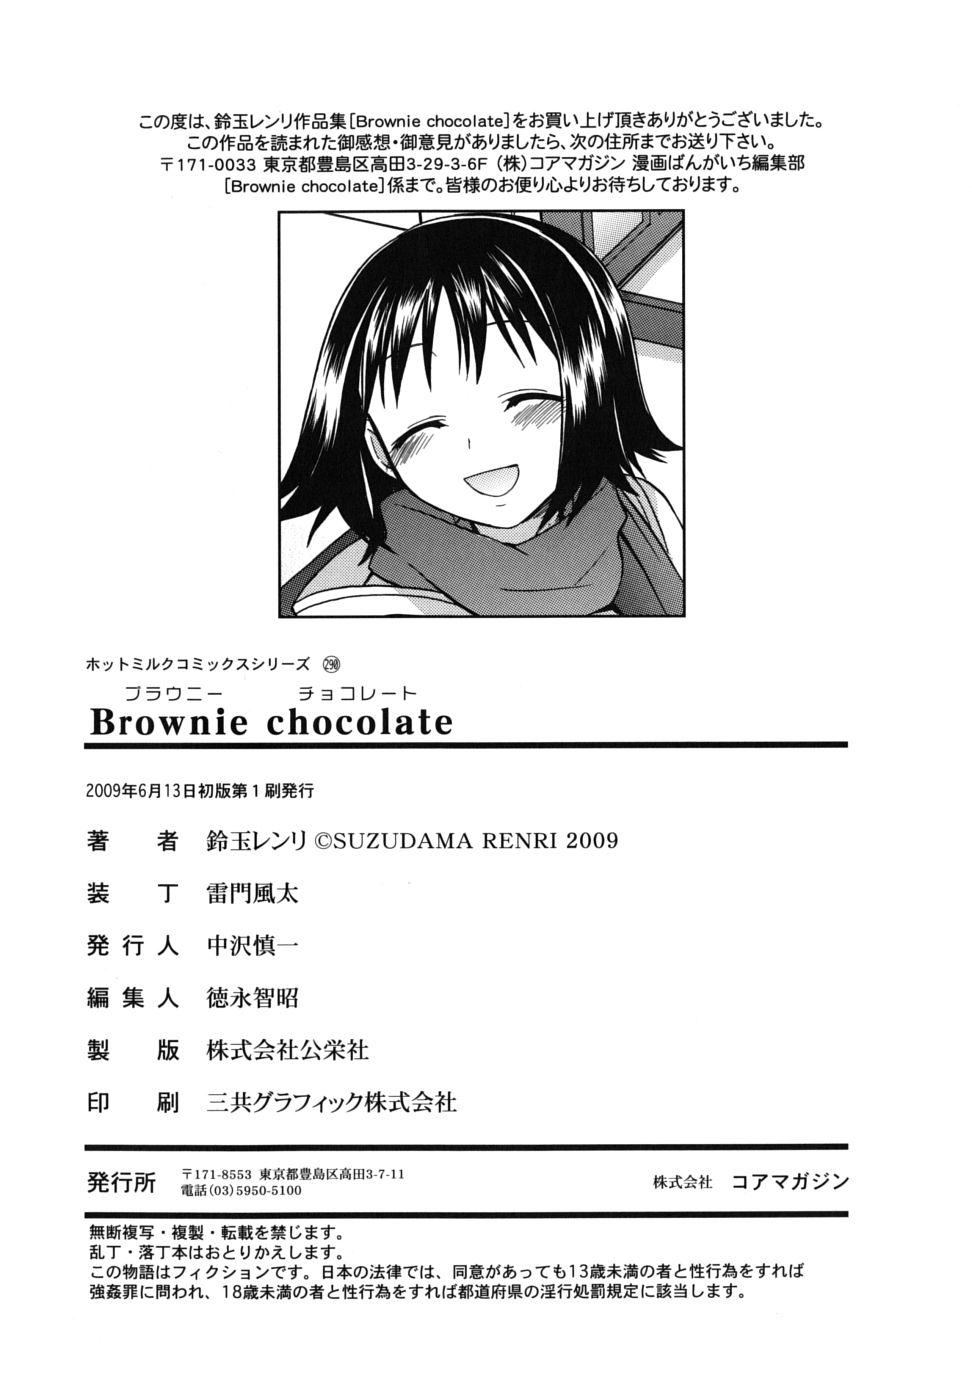 Brownie Chocolate 207